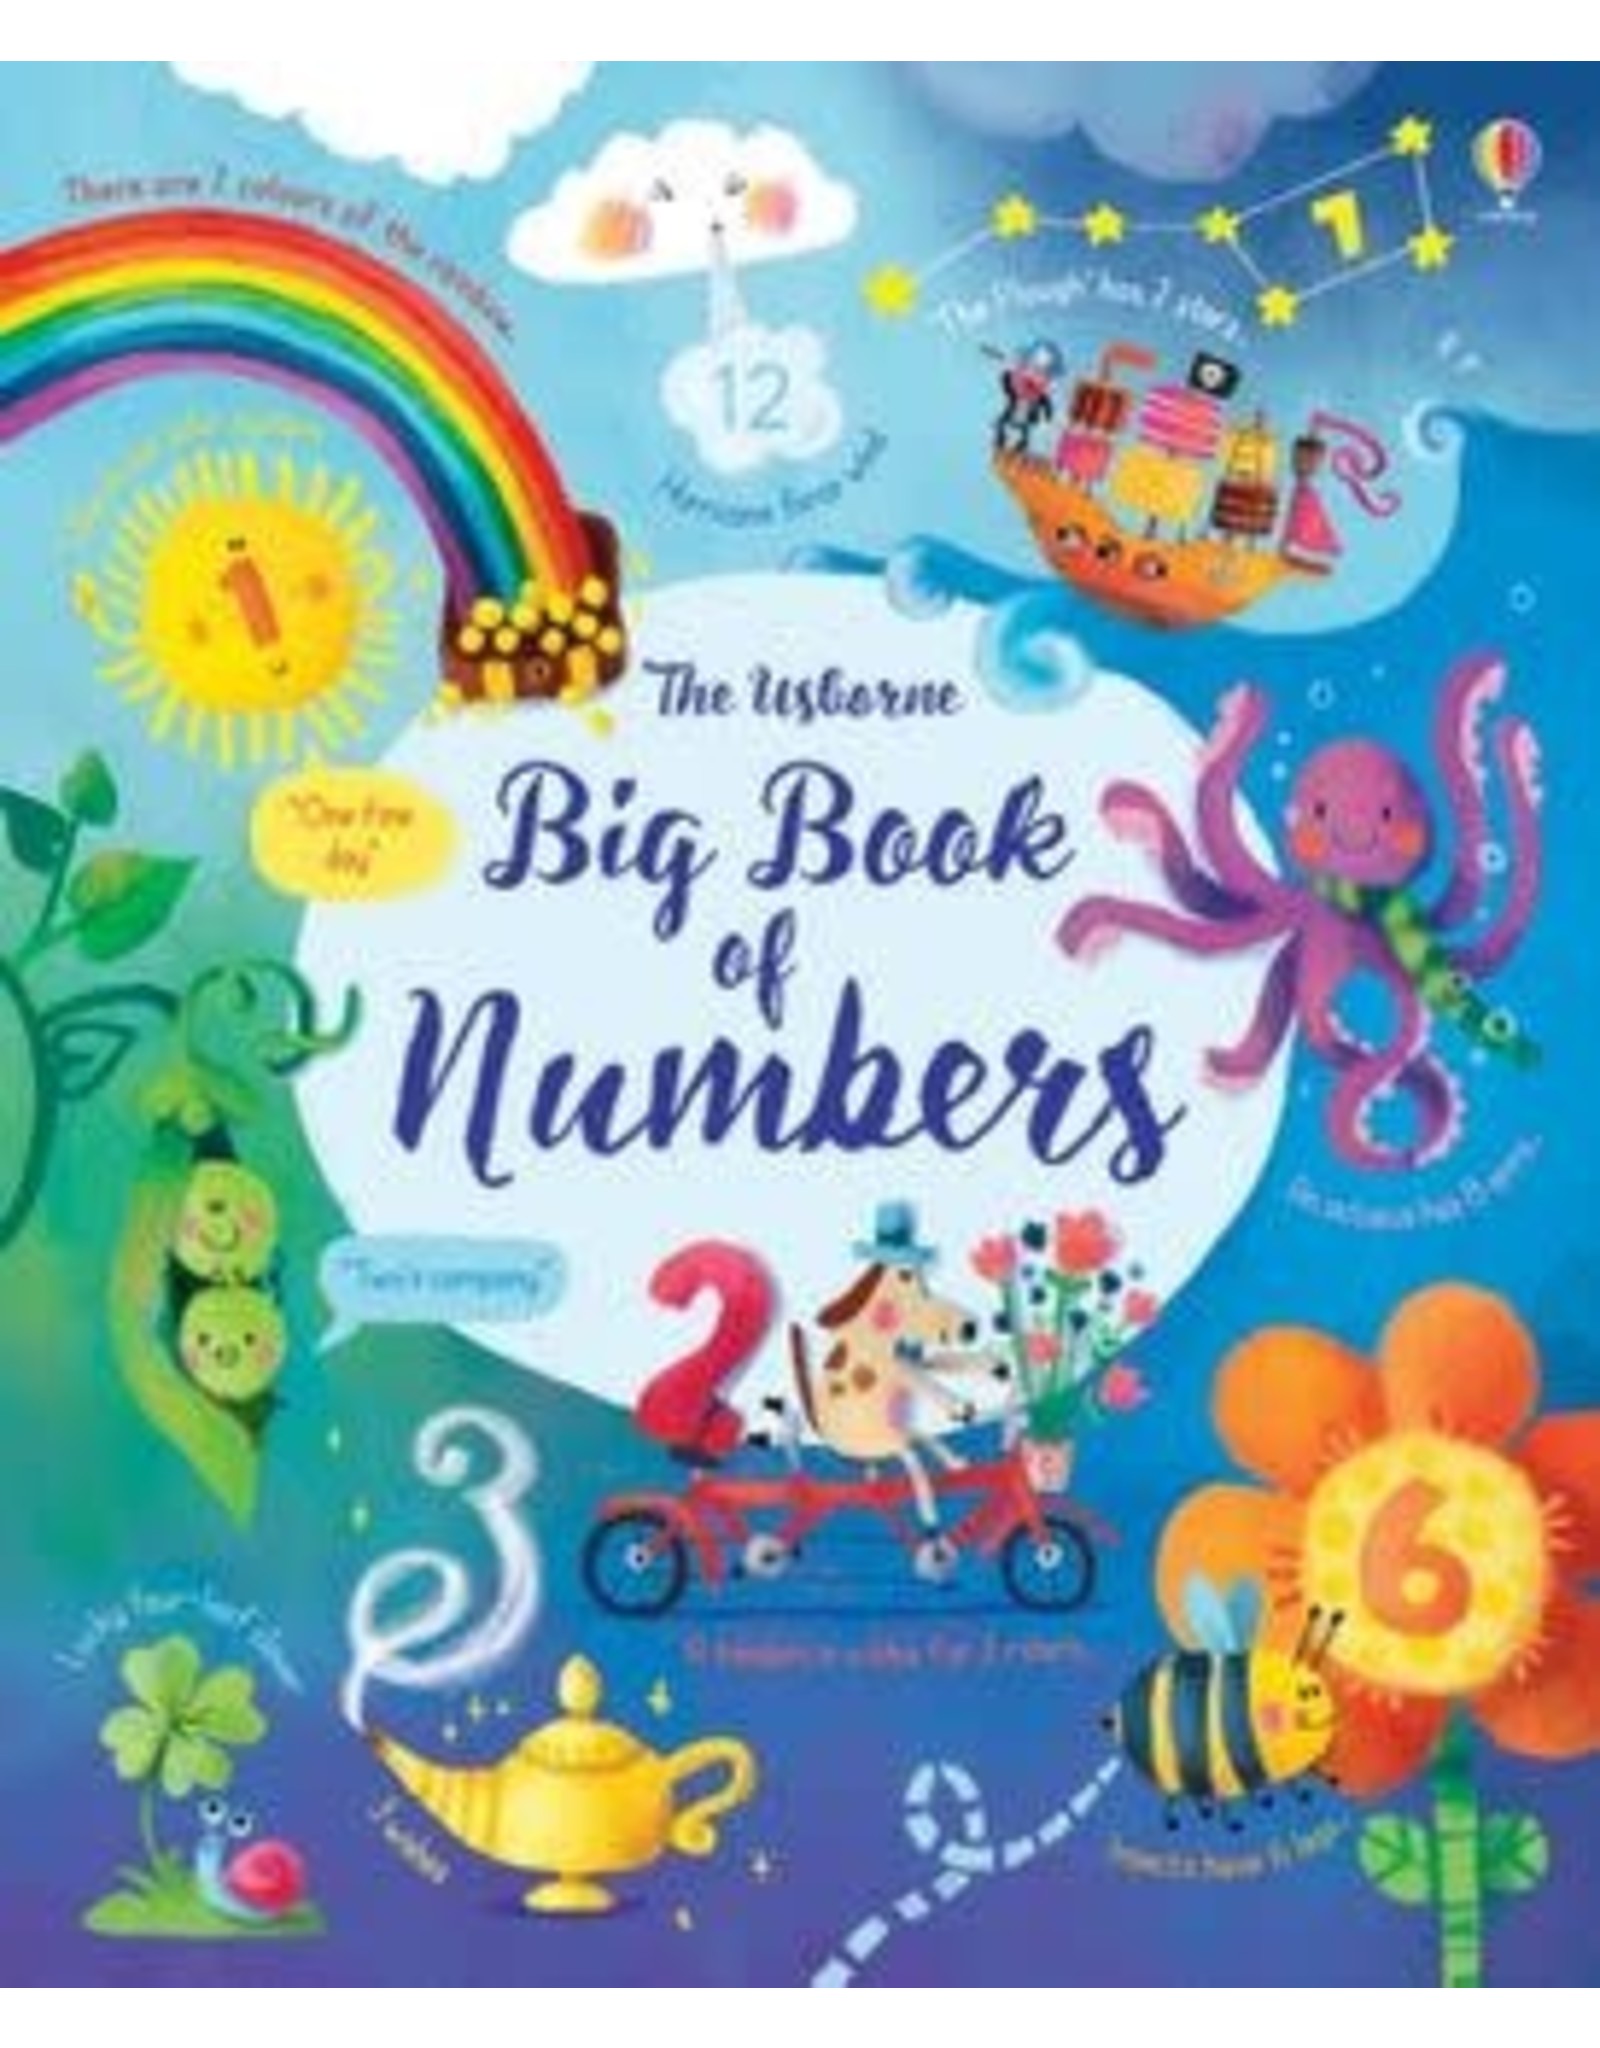 Usborne Big Book Of Numbers